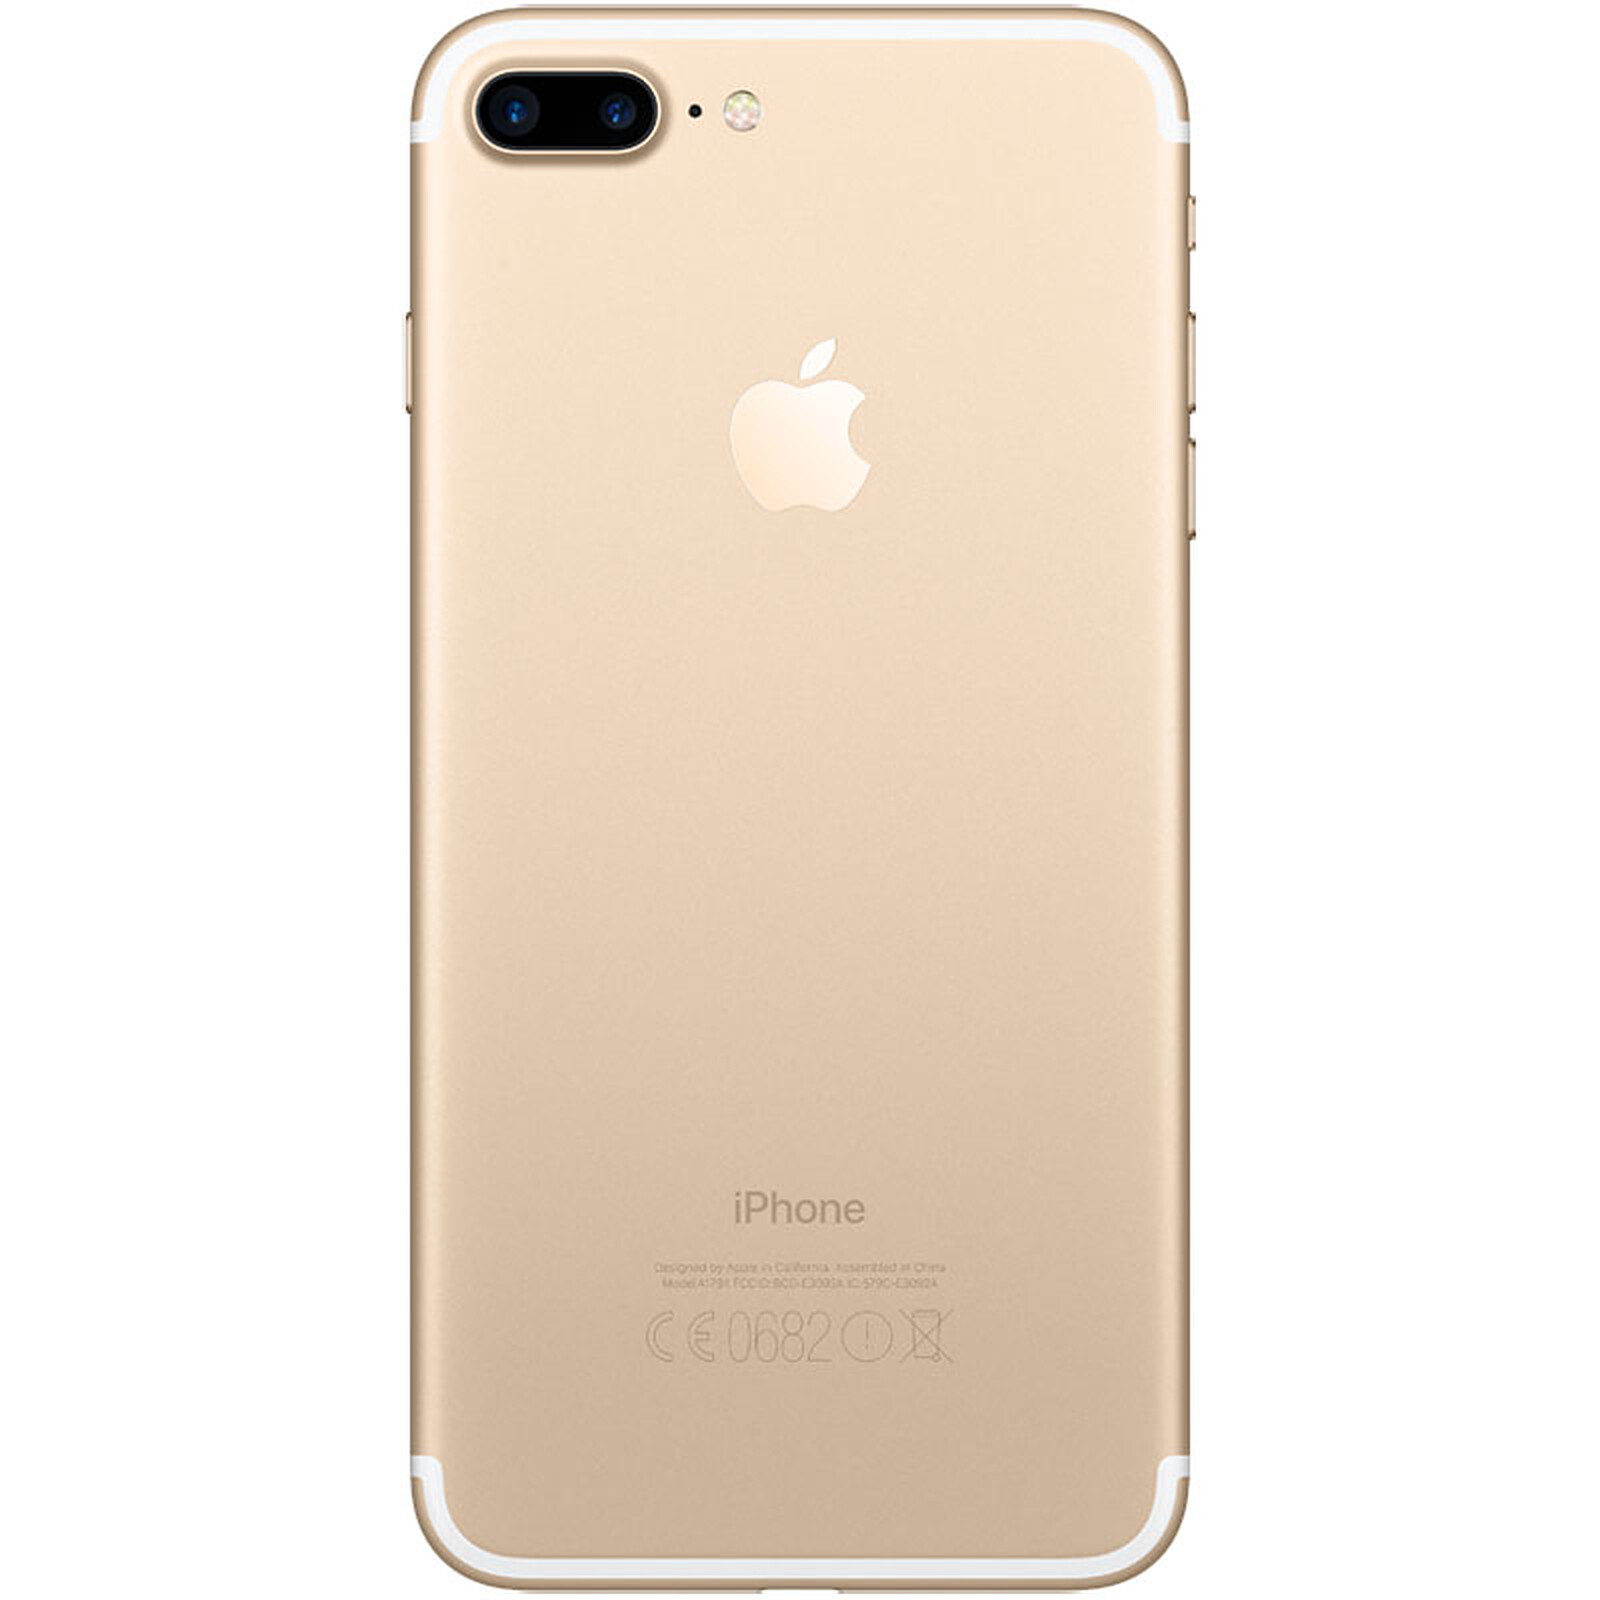 Apple iPhone 7 32GB Gold y smartphone Apple en